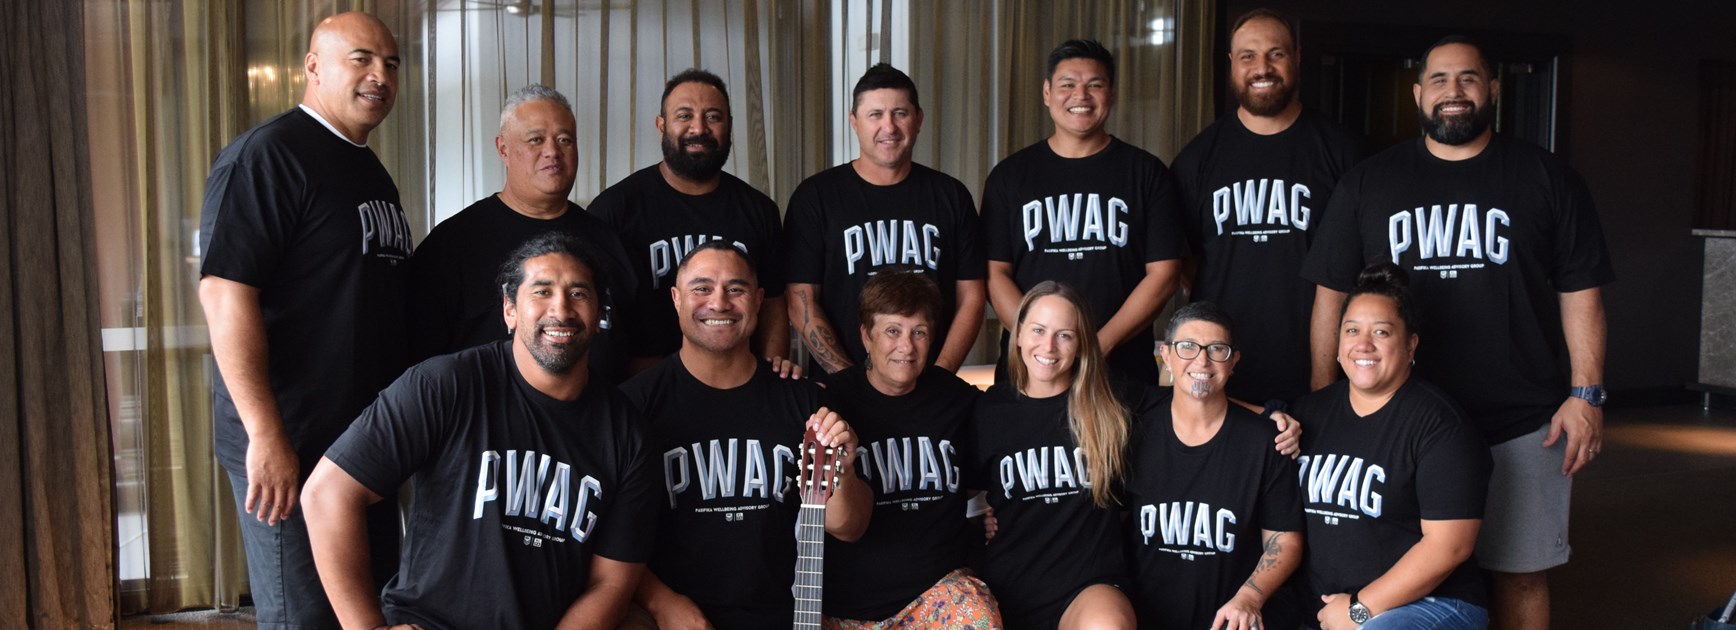 New advisory group helping highlight Pasifika perspectives